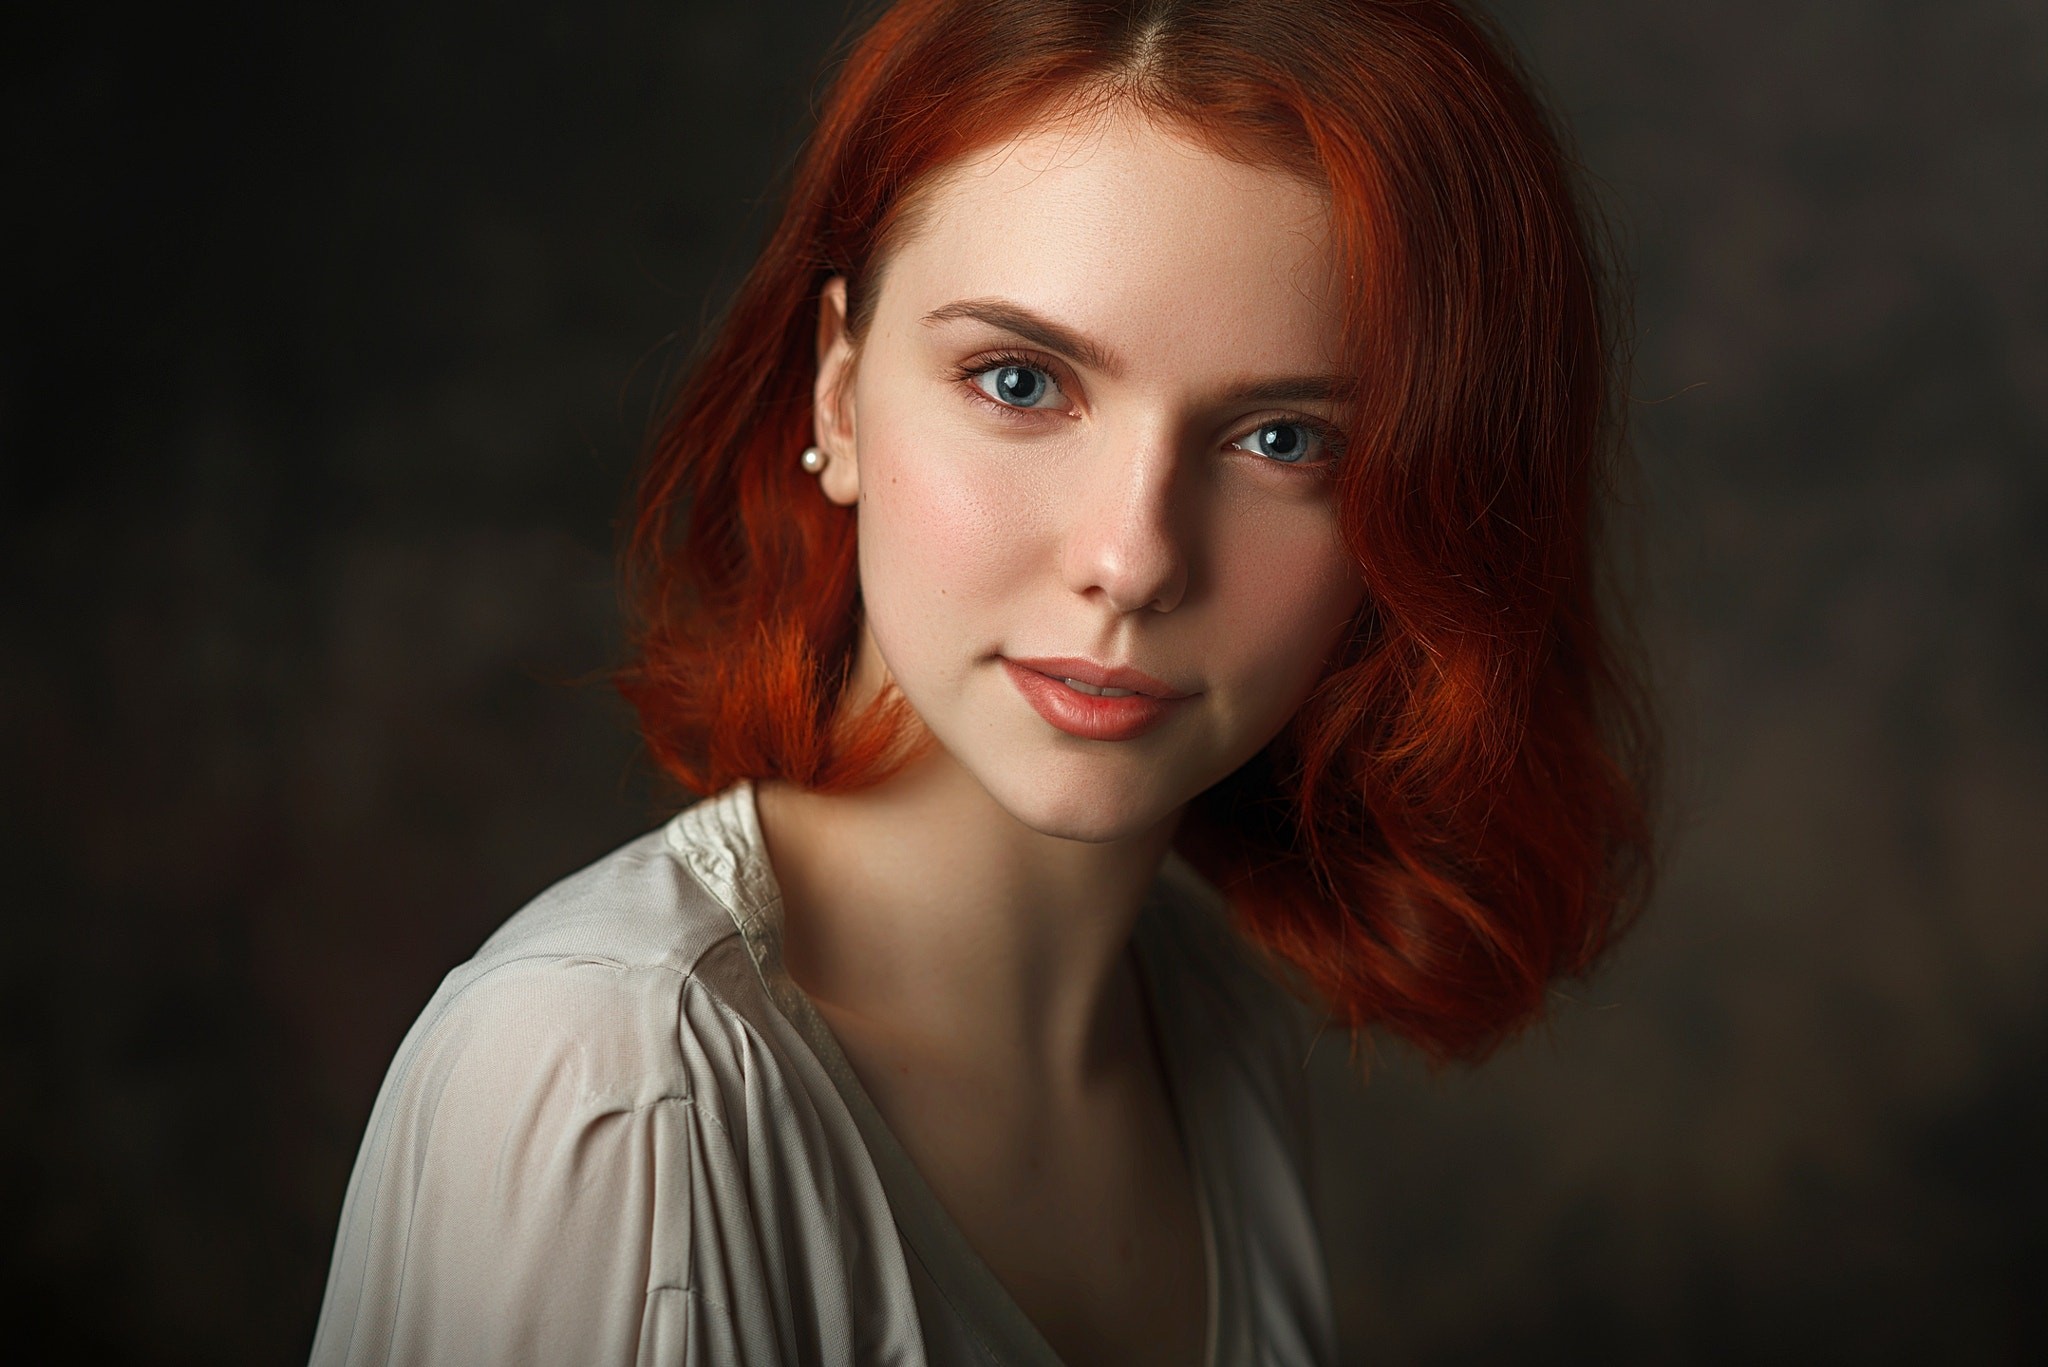 People 2048x1367 women face smiling redhead blue eyes portrait depth of field simple background no bra Pavel Cherepko